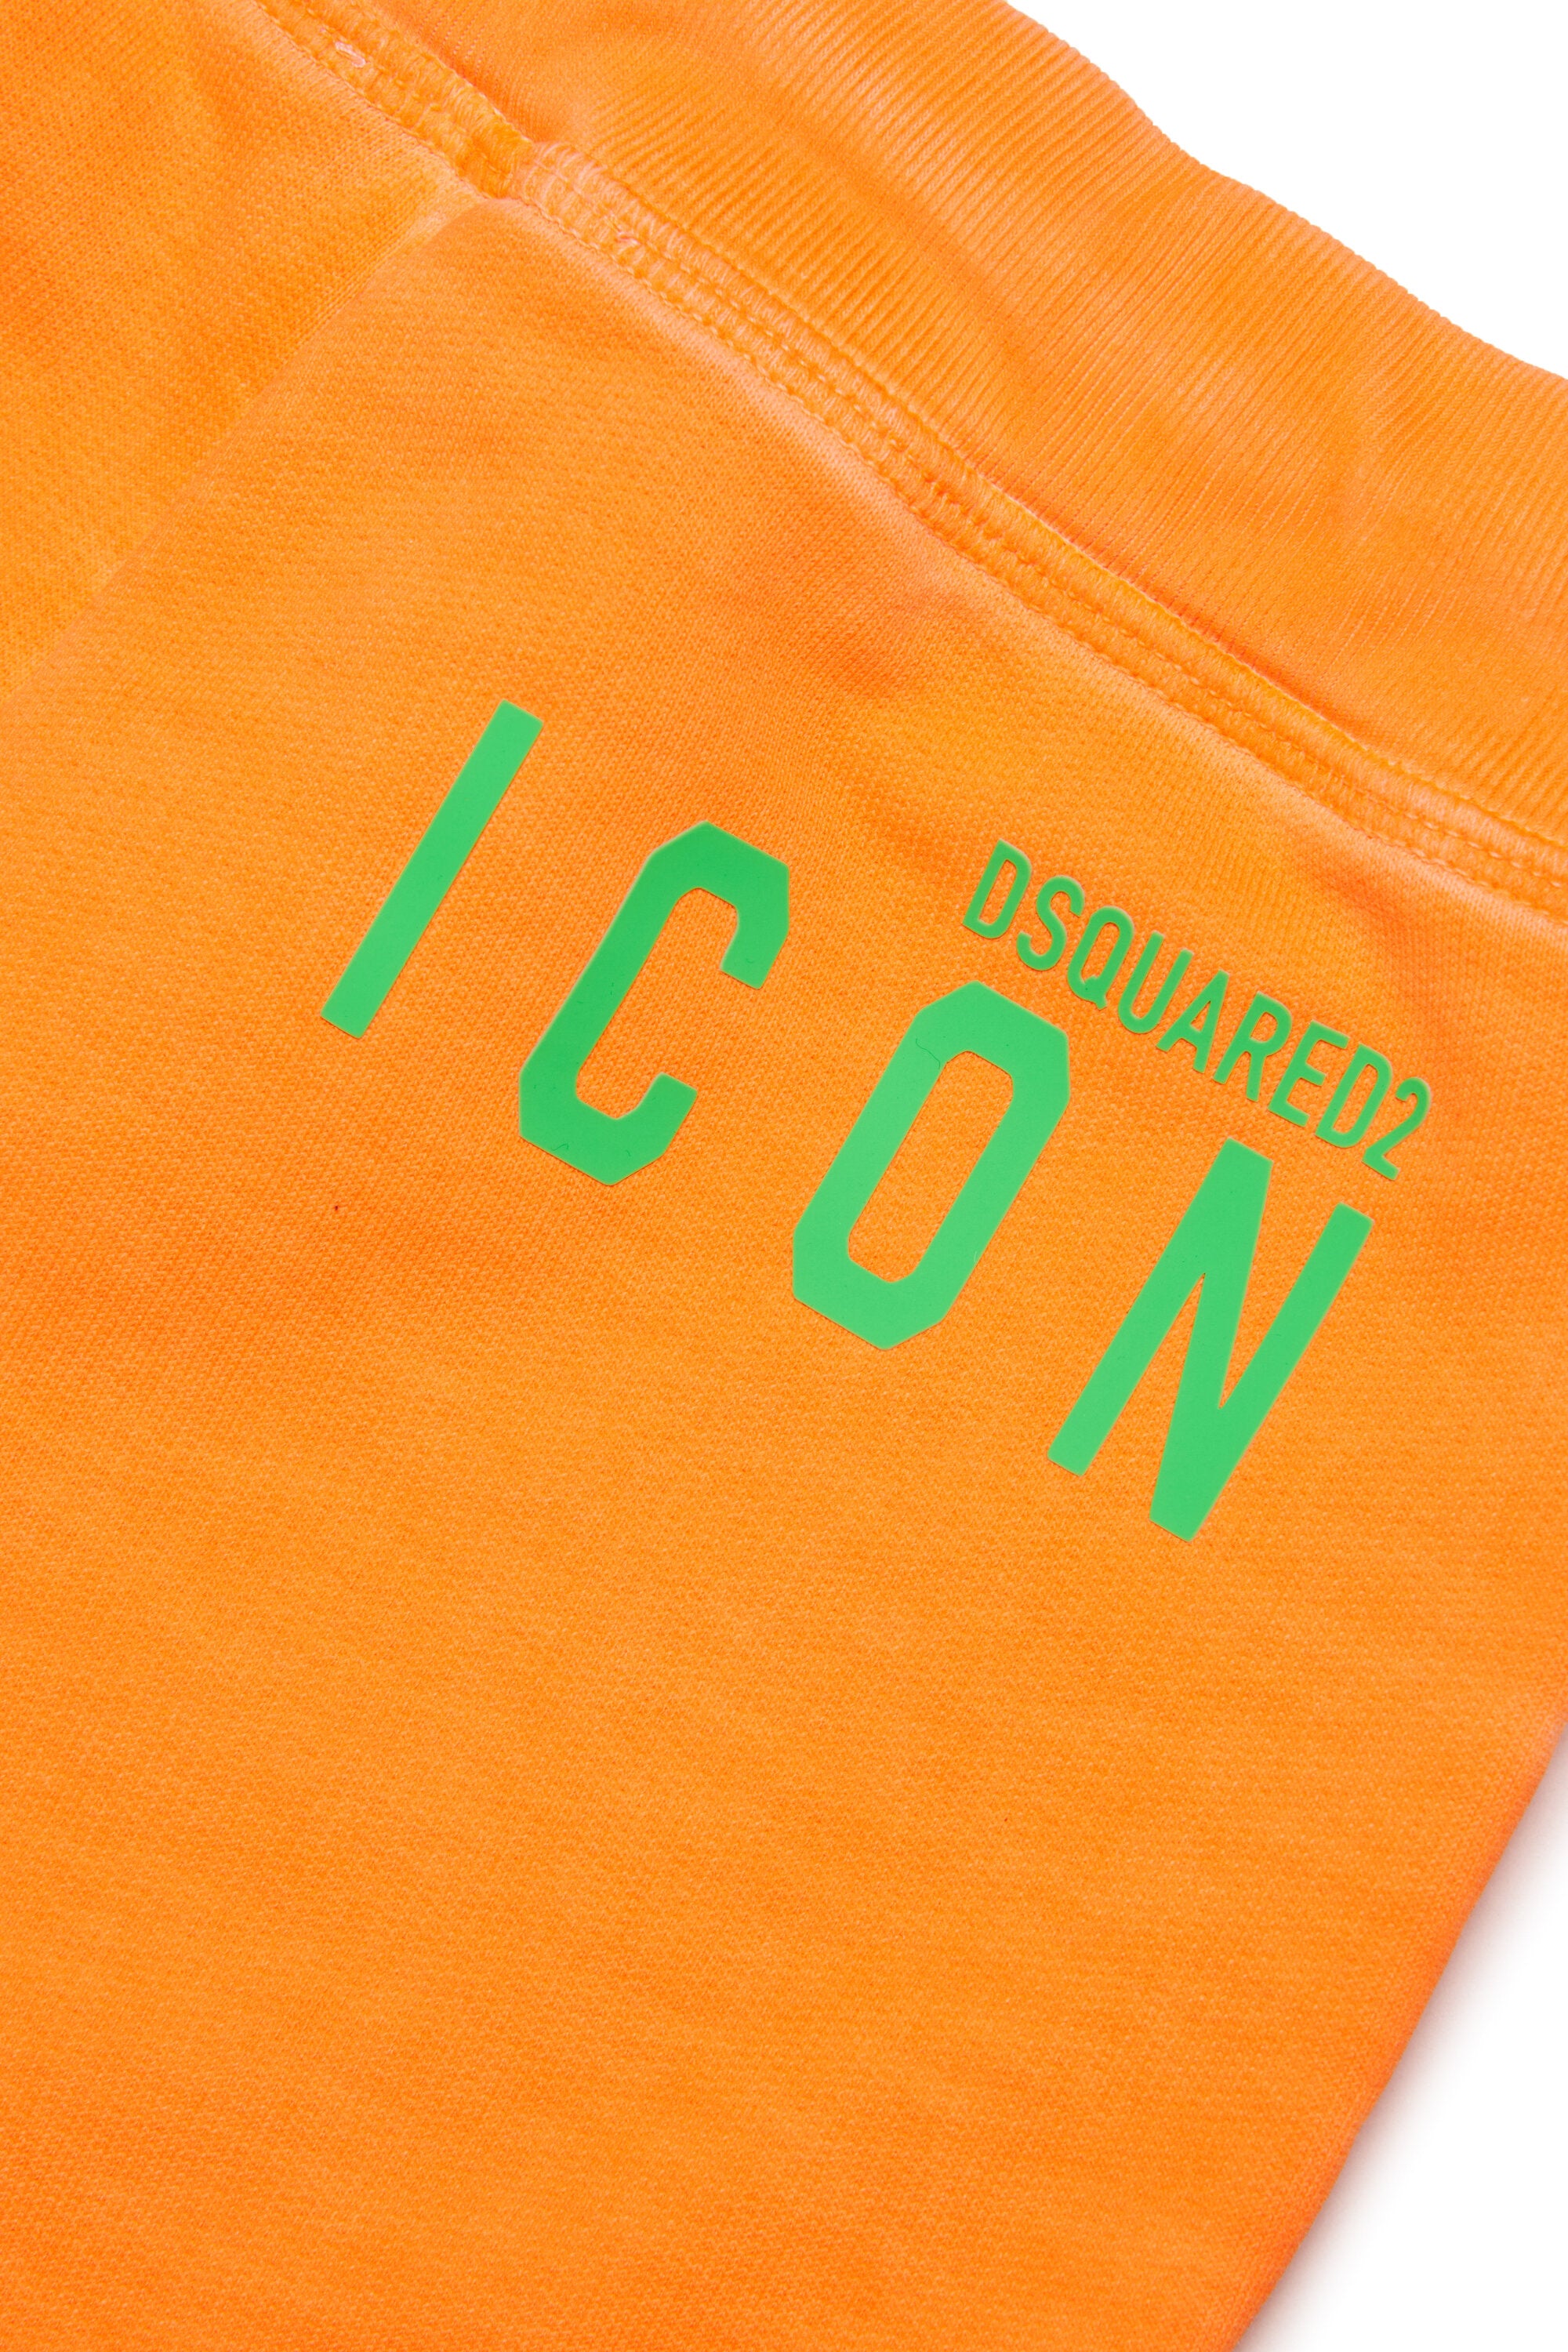 Icon fluo print shorts